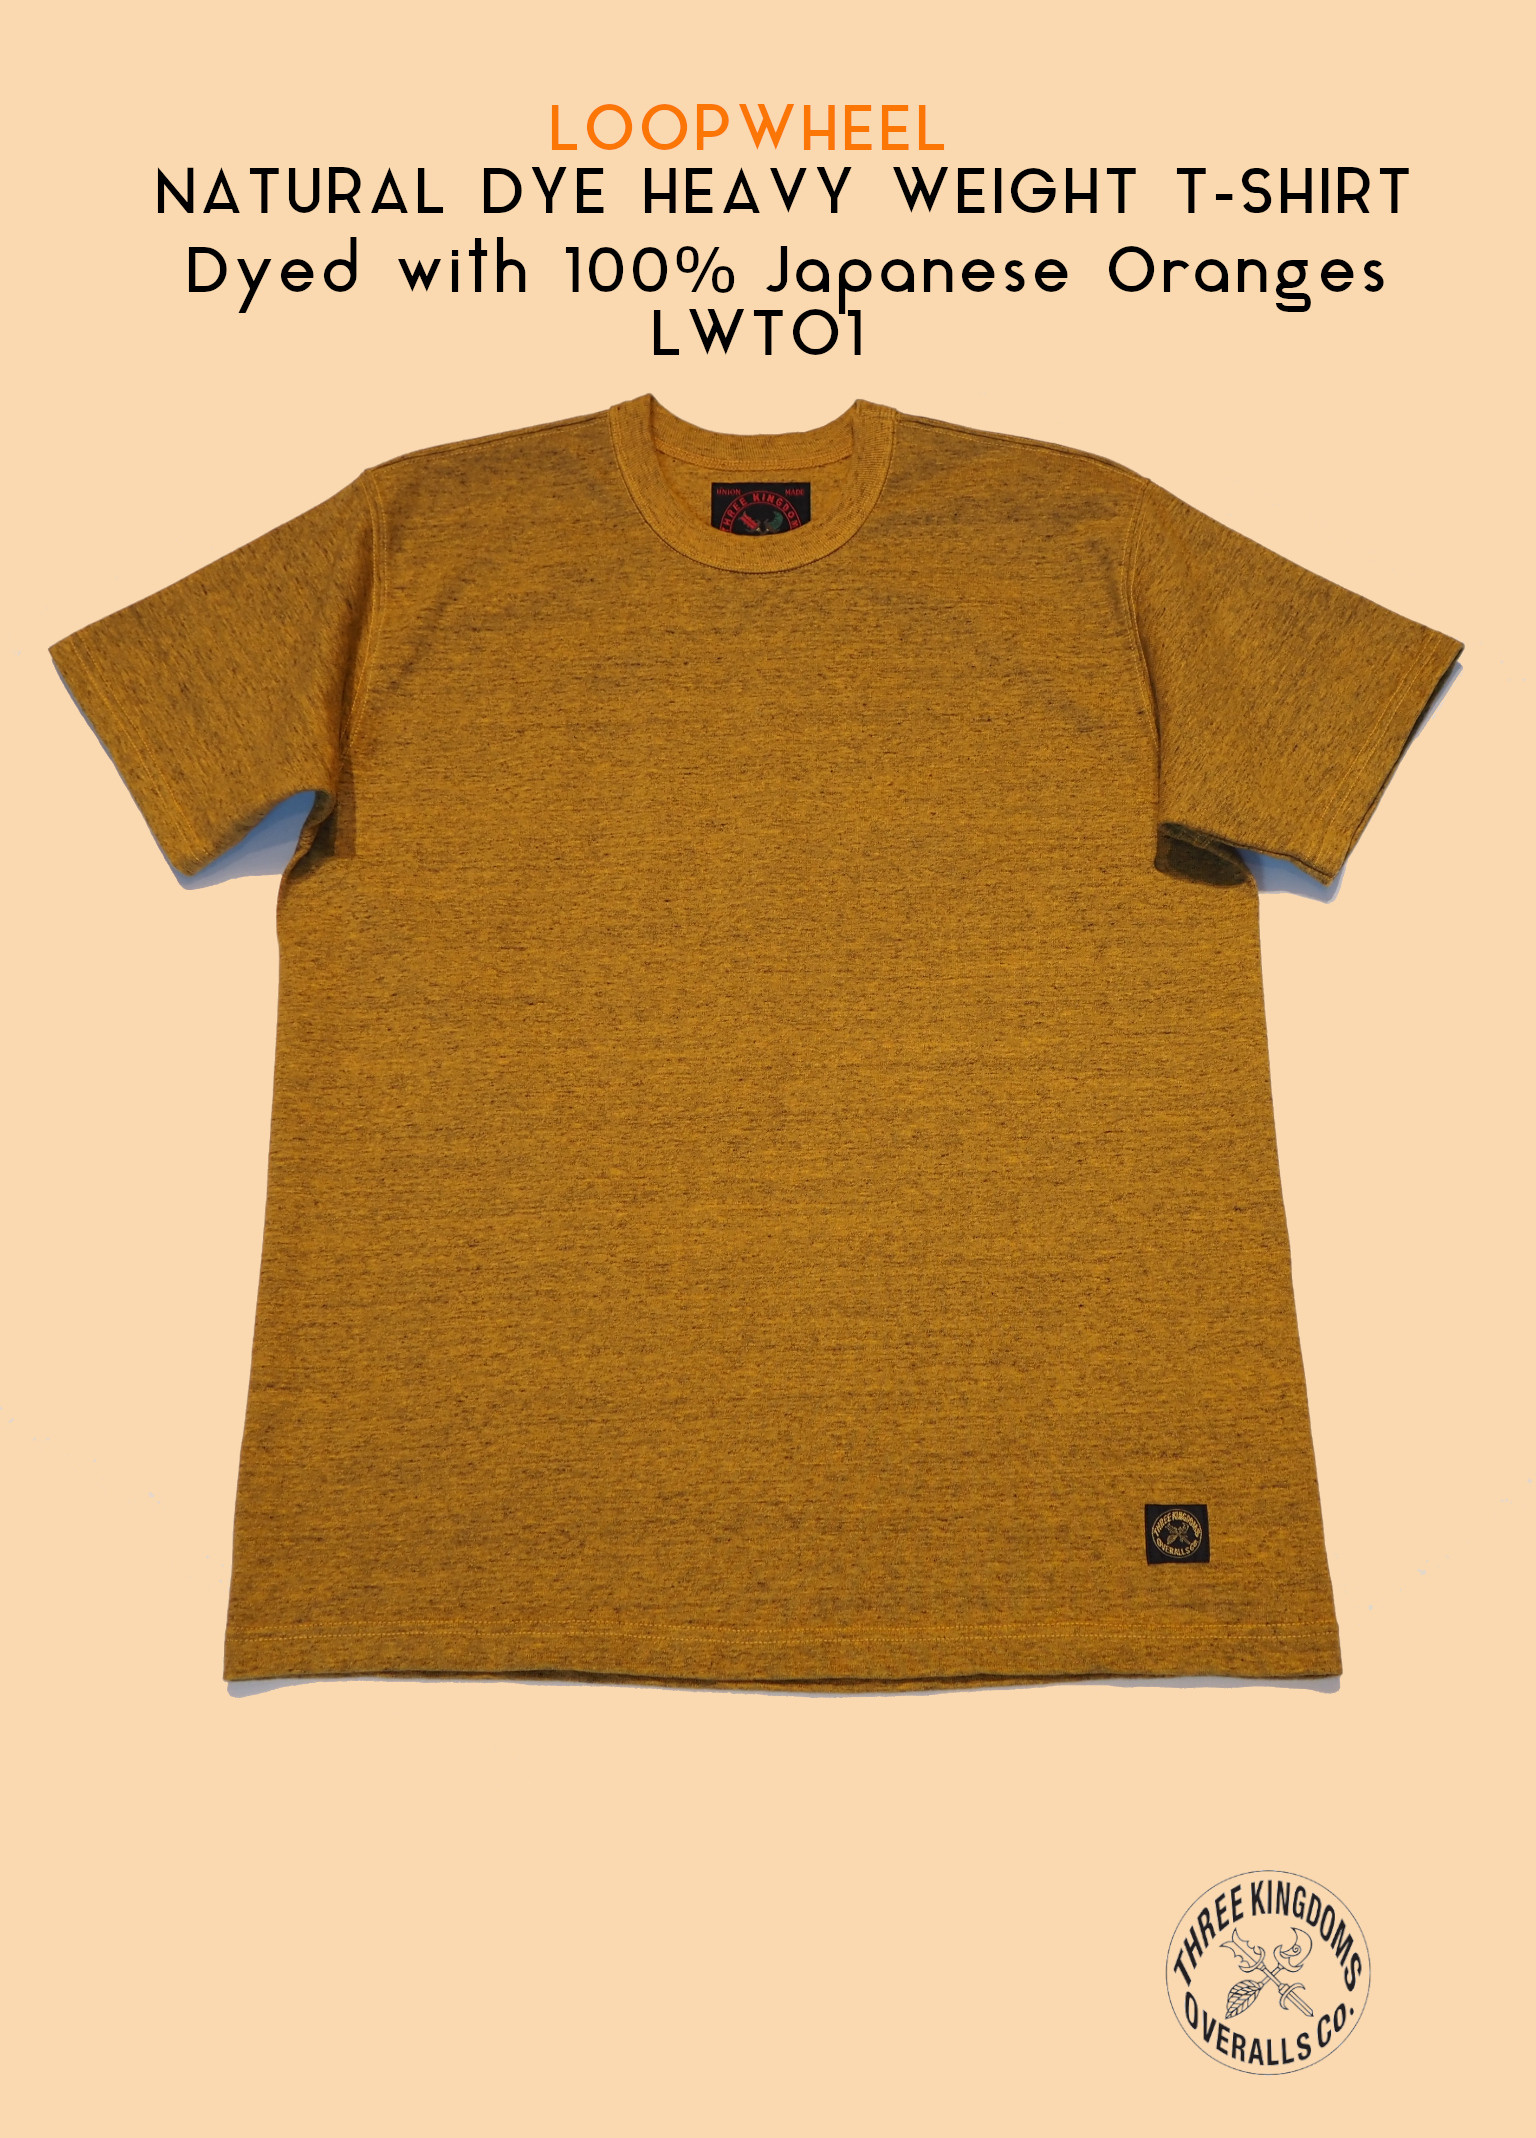 LWTO1 LOOPWHEEL NATURAL DYE HEAVY WEIGHT T-Shirt（Japanese Orange）公式オンラインショップにて販売開始📣📣📣。